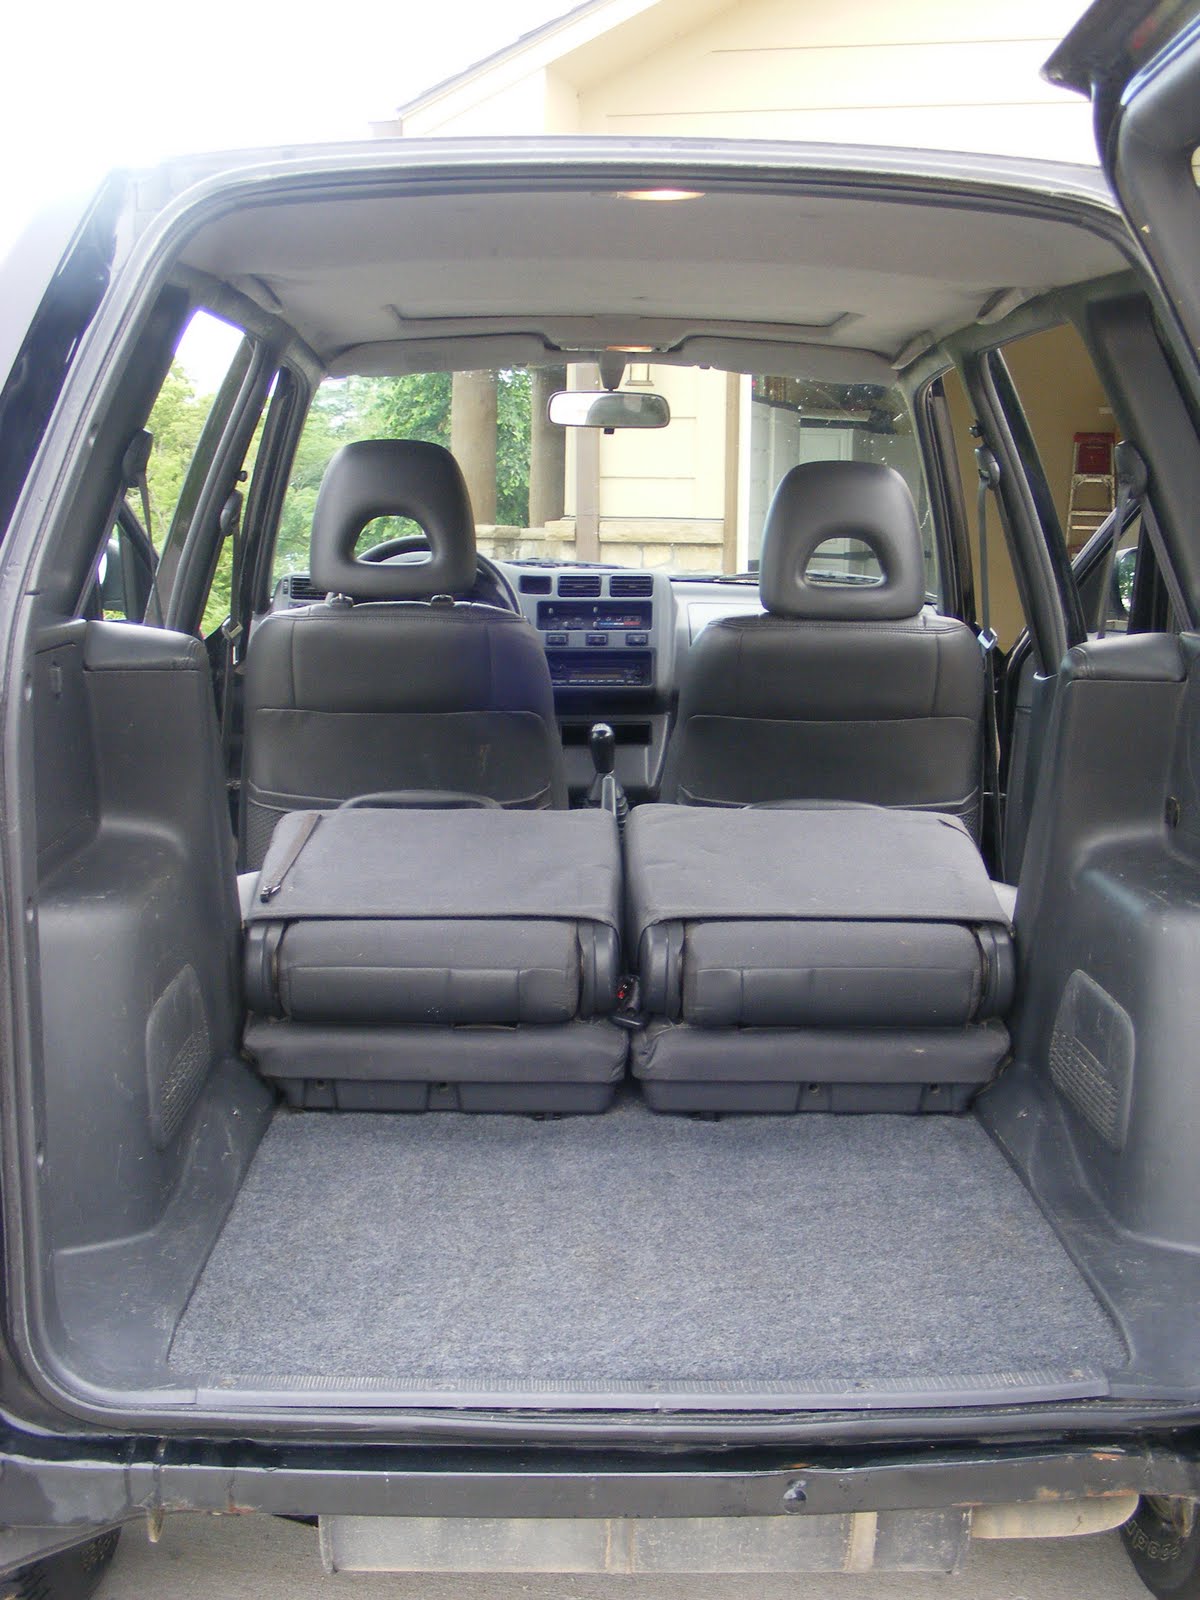 1999 Toyota Rav4 L: Interior